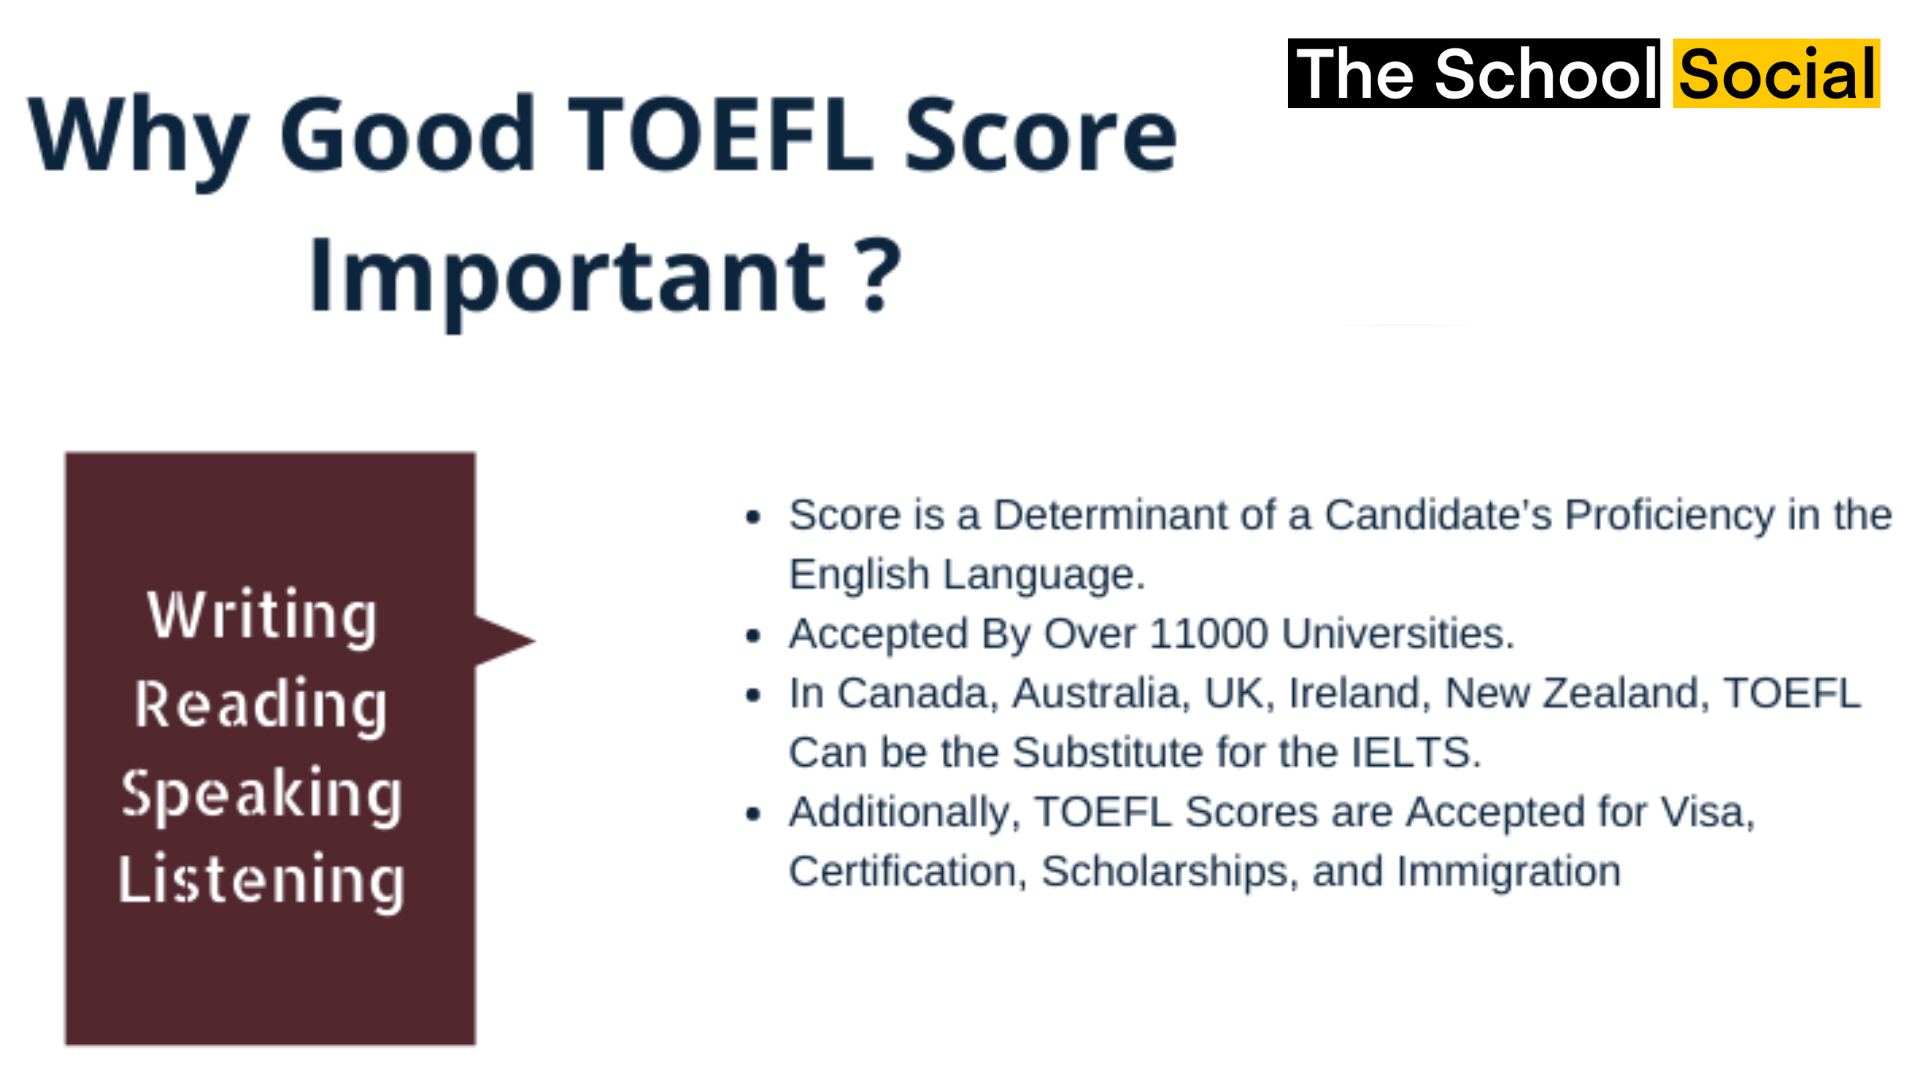 TOEFL score